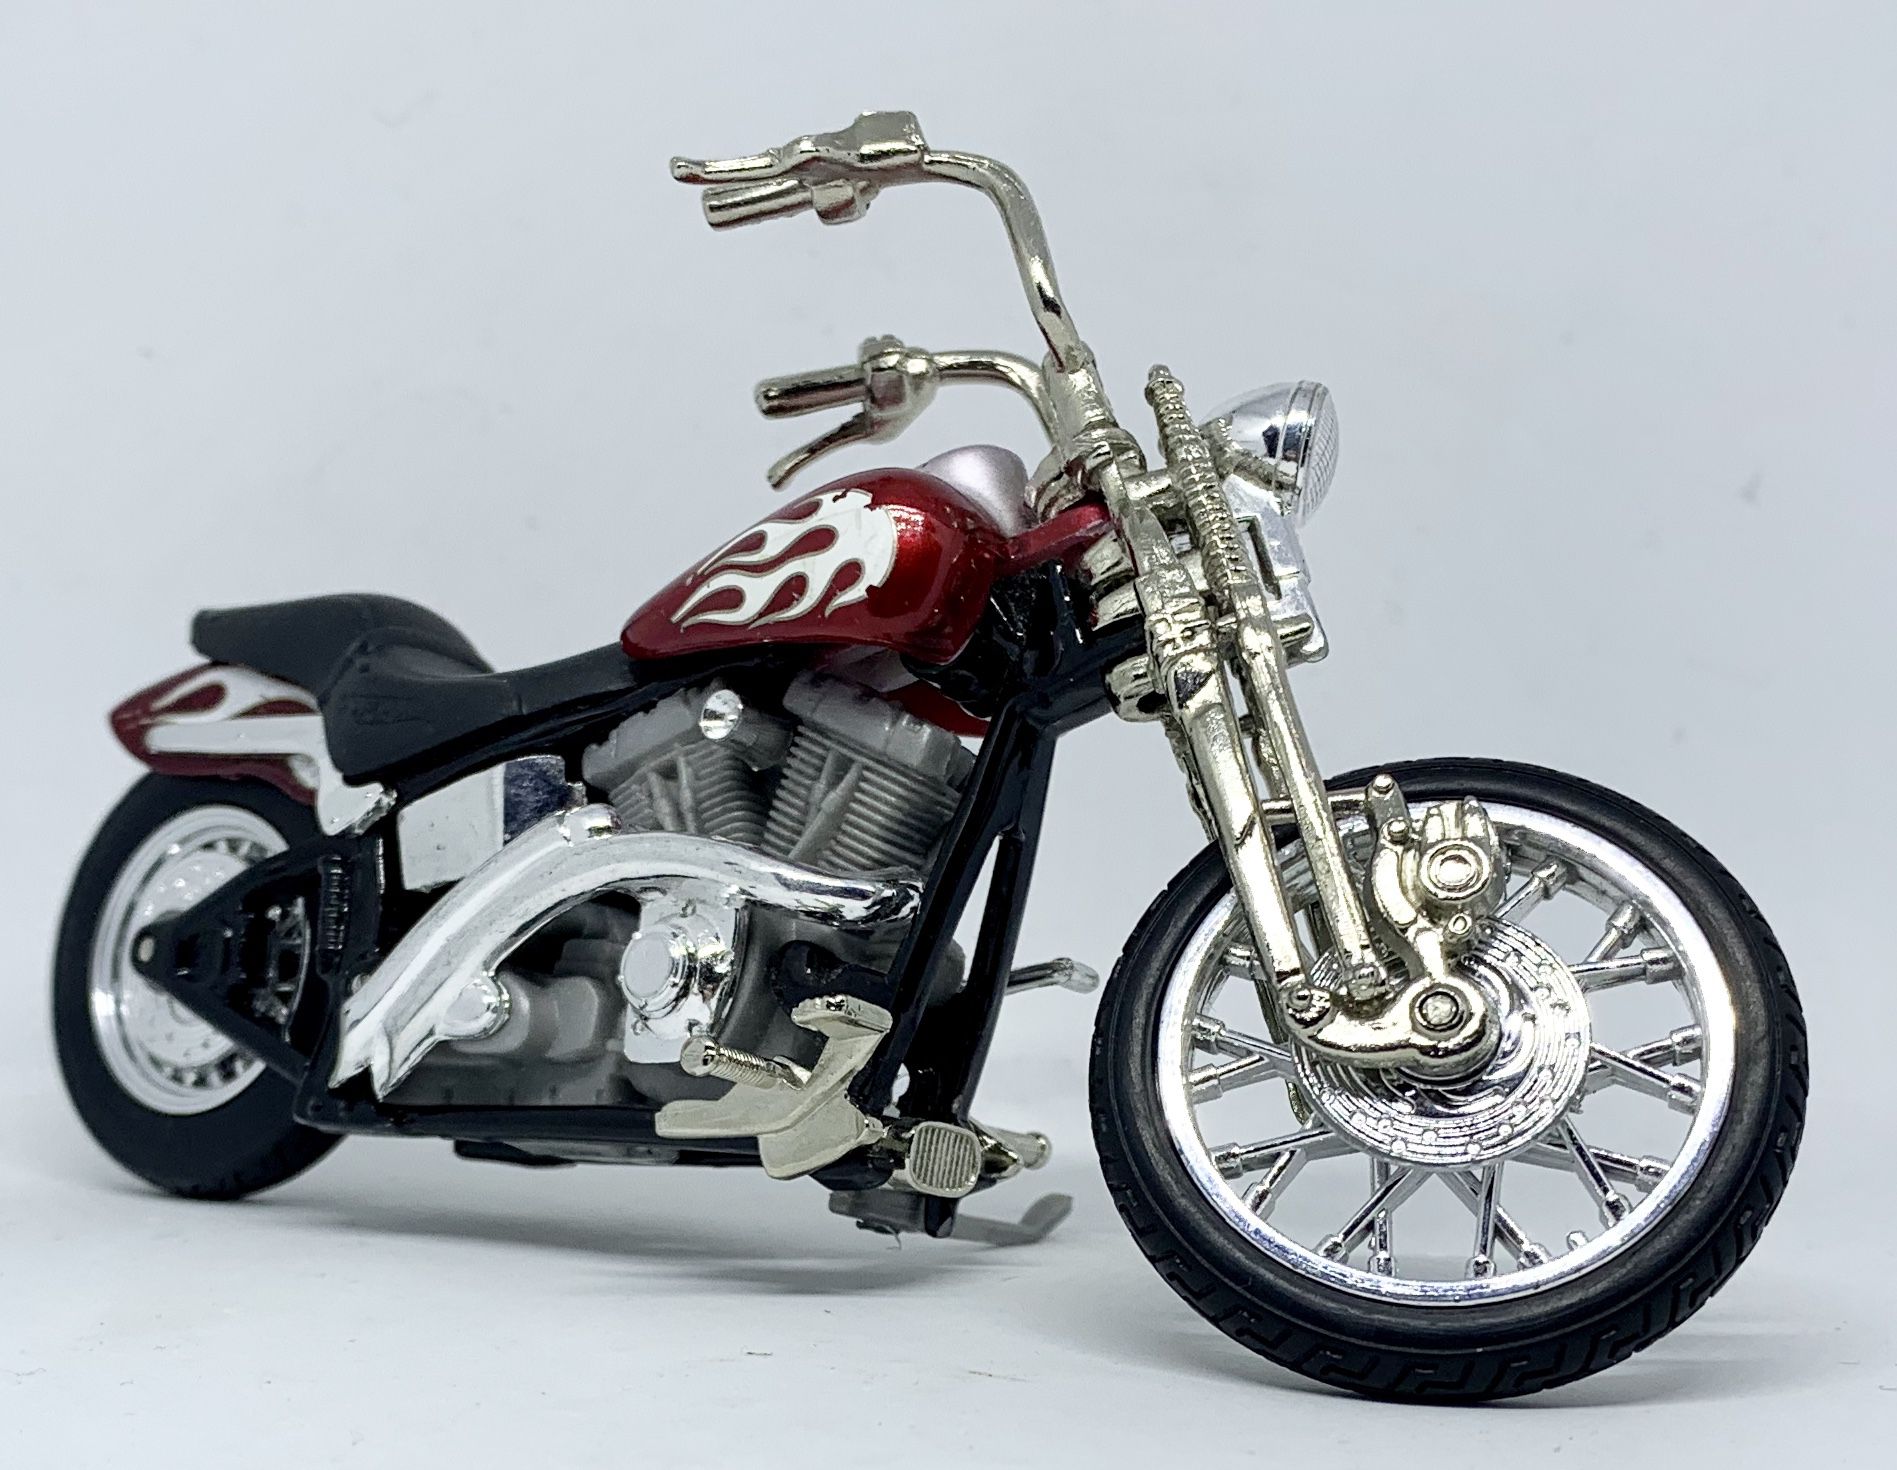 Hot Wheels 1/18 scale motorcycle